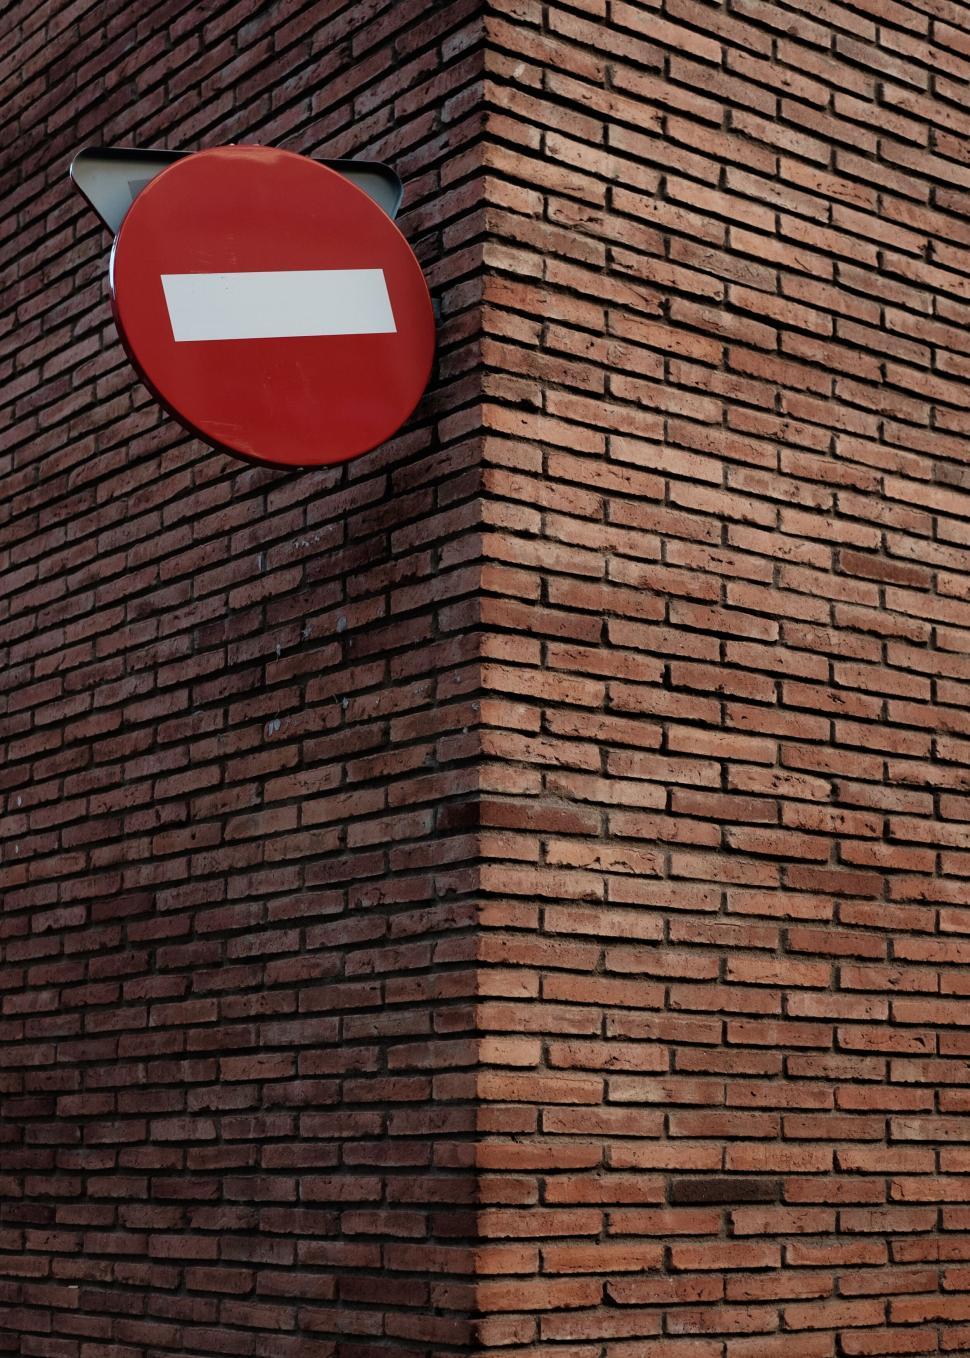 Free Image of bricks wall tiles texture design brickwork home brown sign 